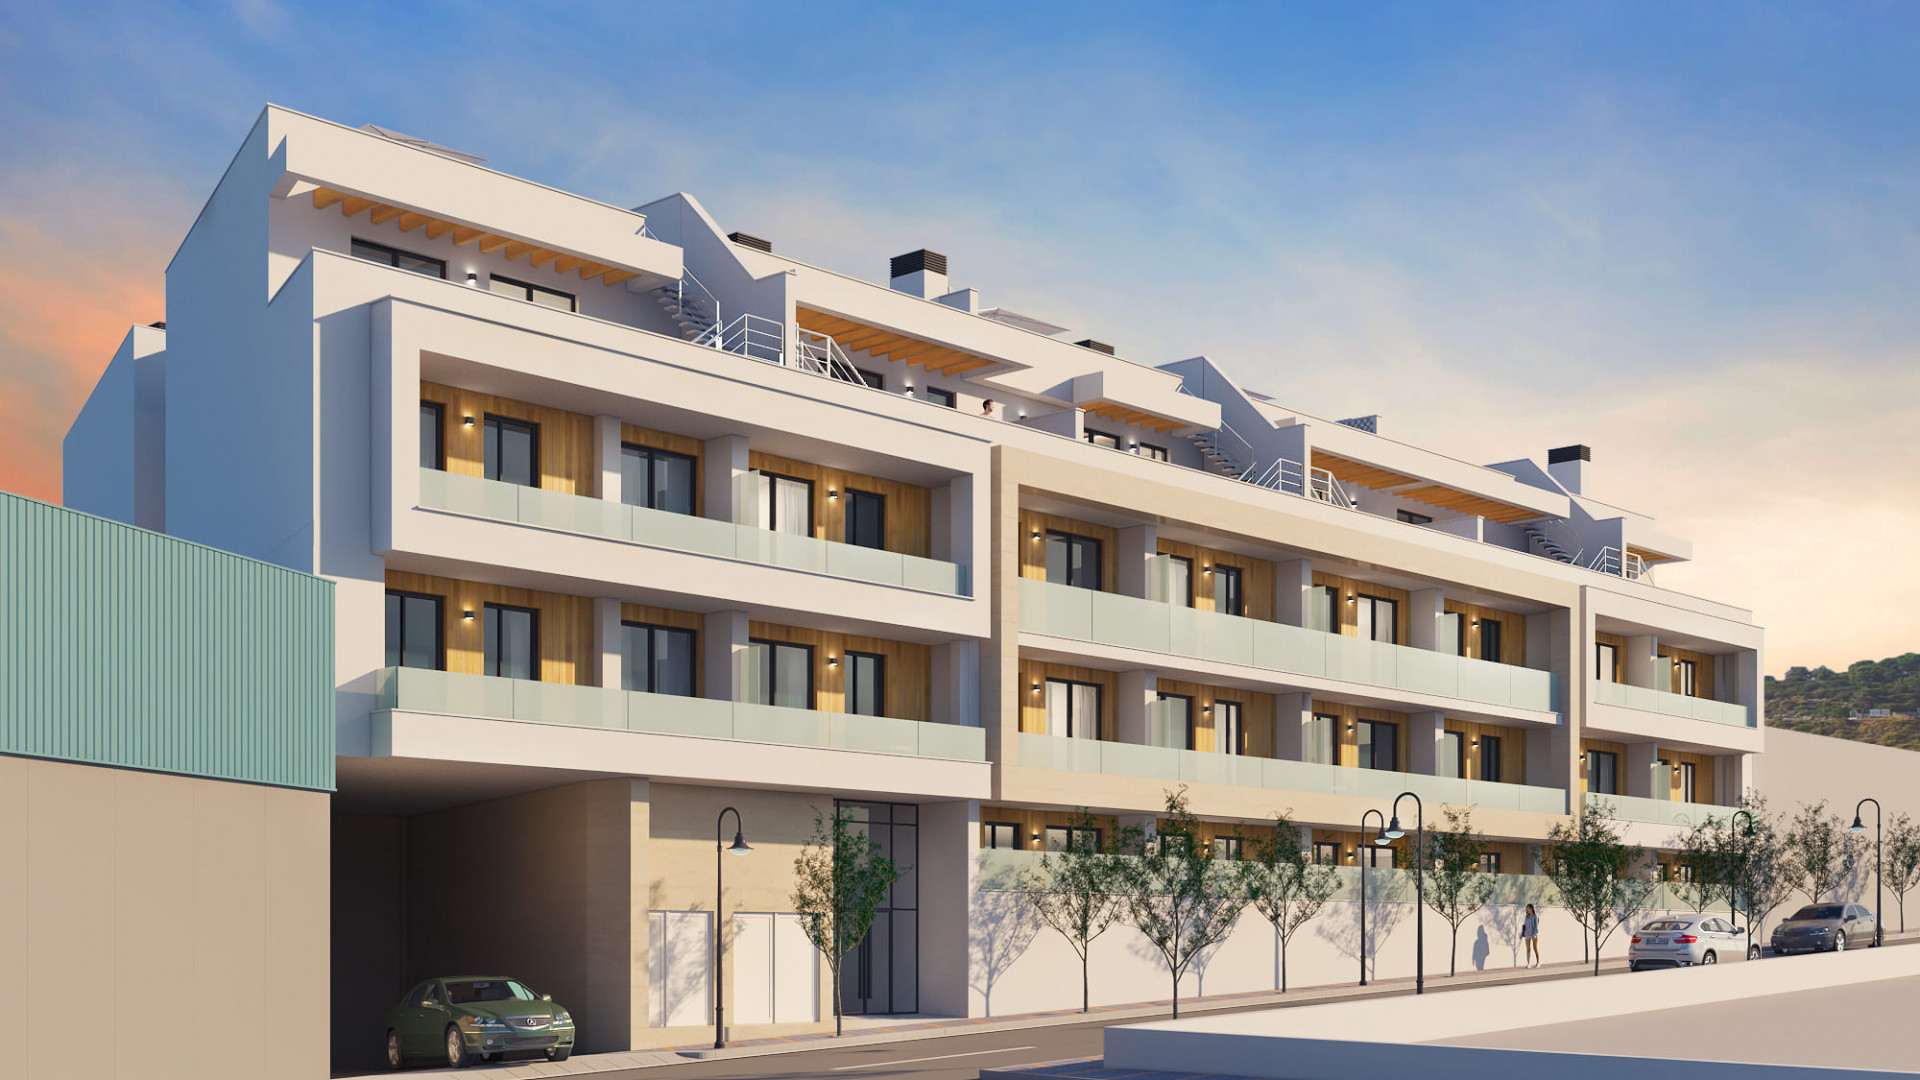 Residencial Mijasol: Development of 56 homes from 1 to 3 bedrooms in Mijas Costa.